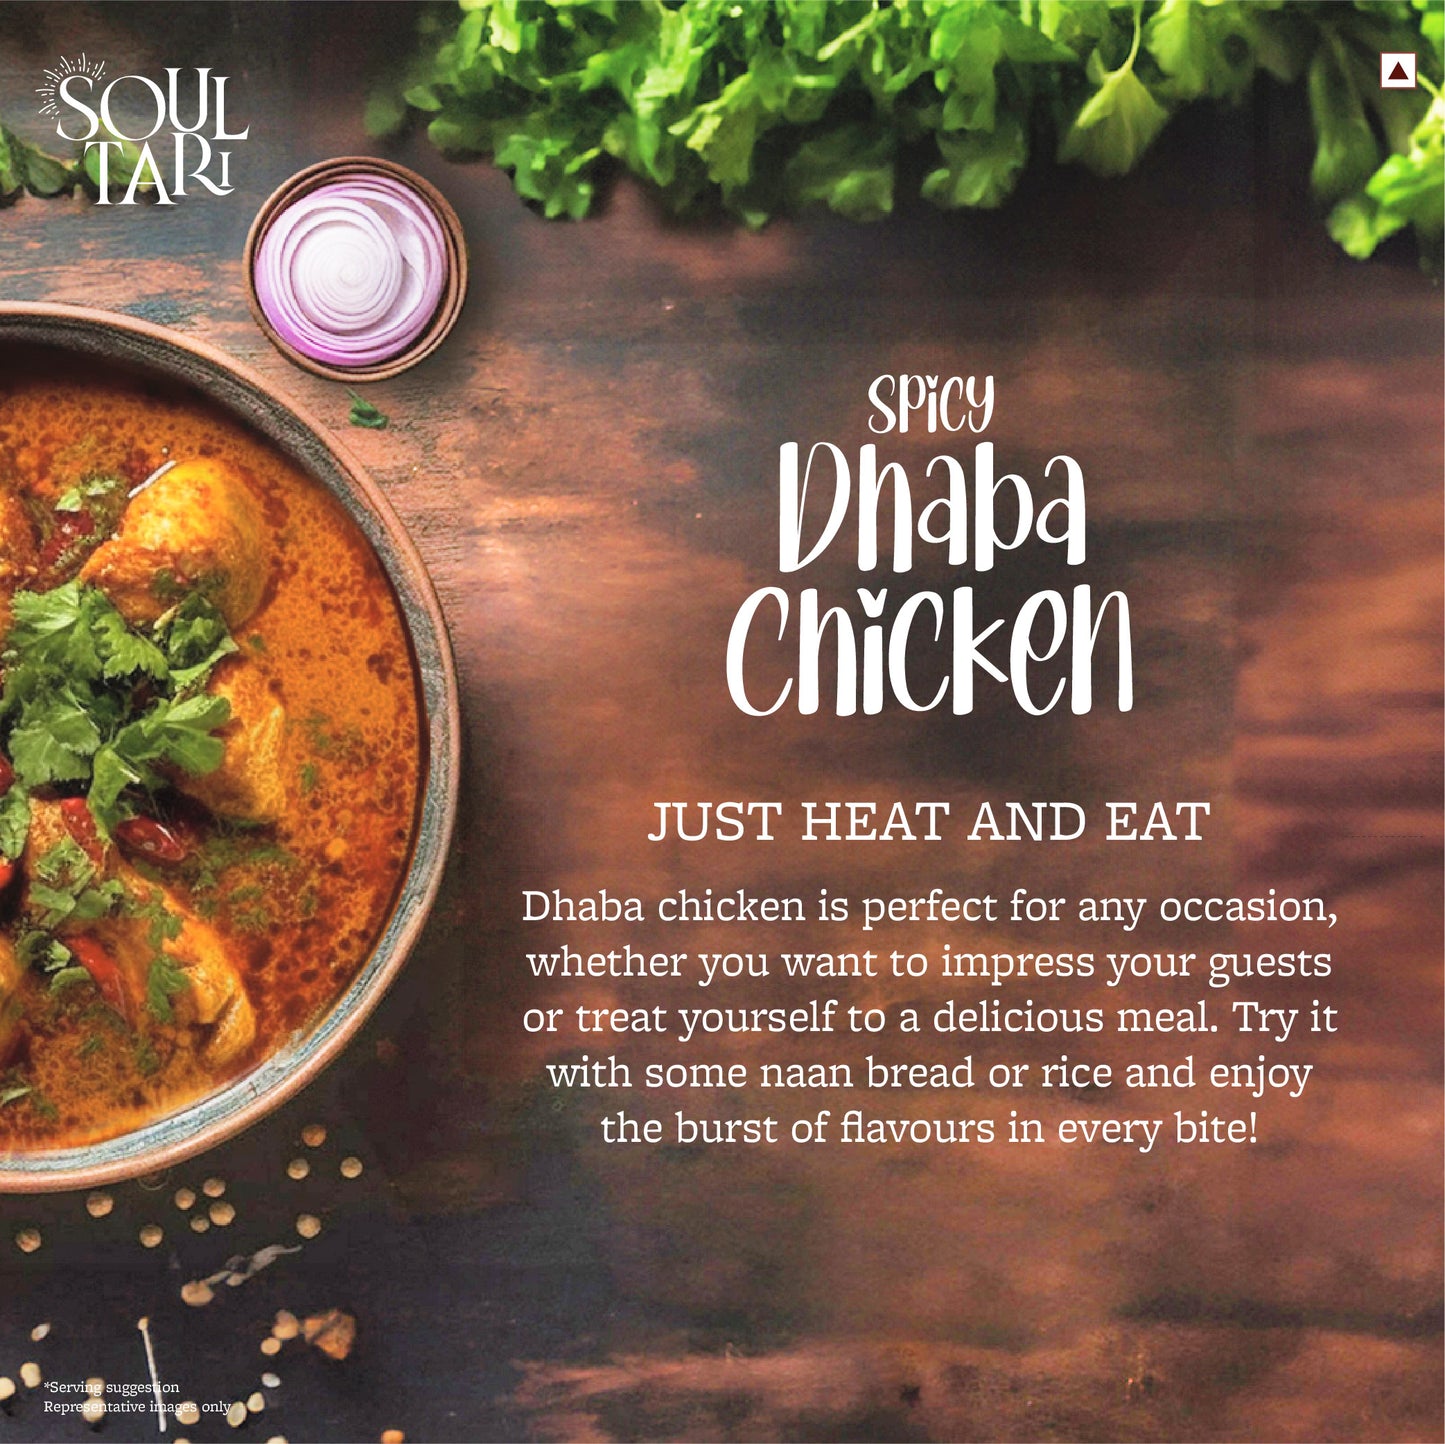 Spicy Dhaba Chicken